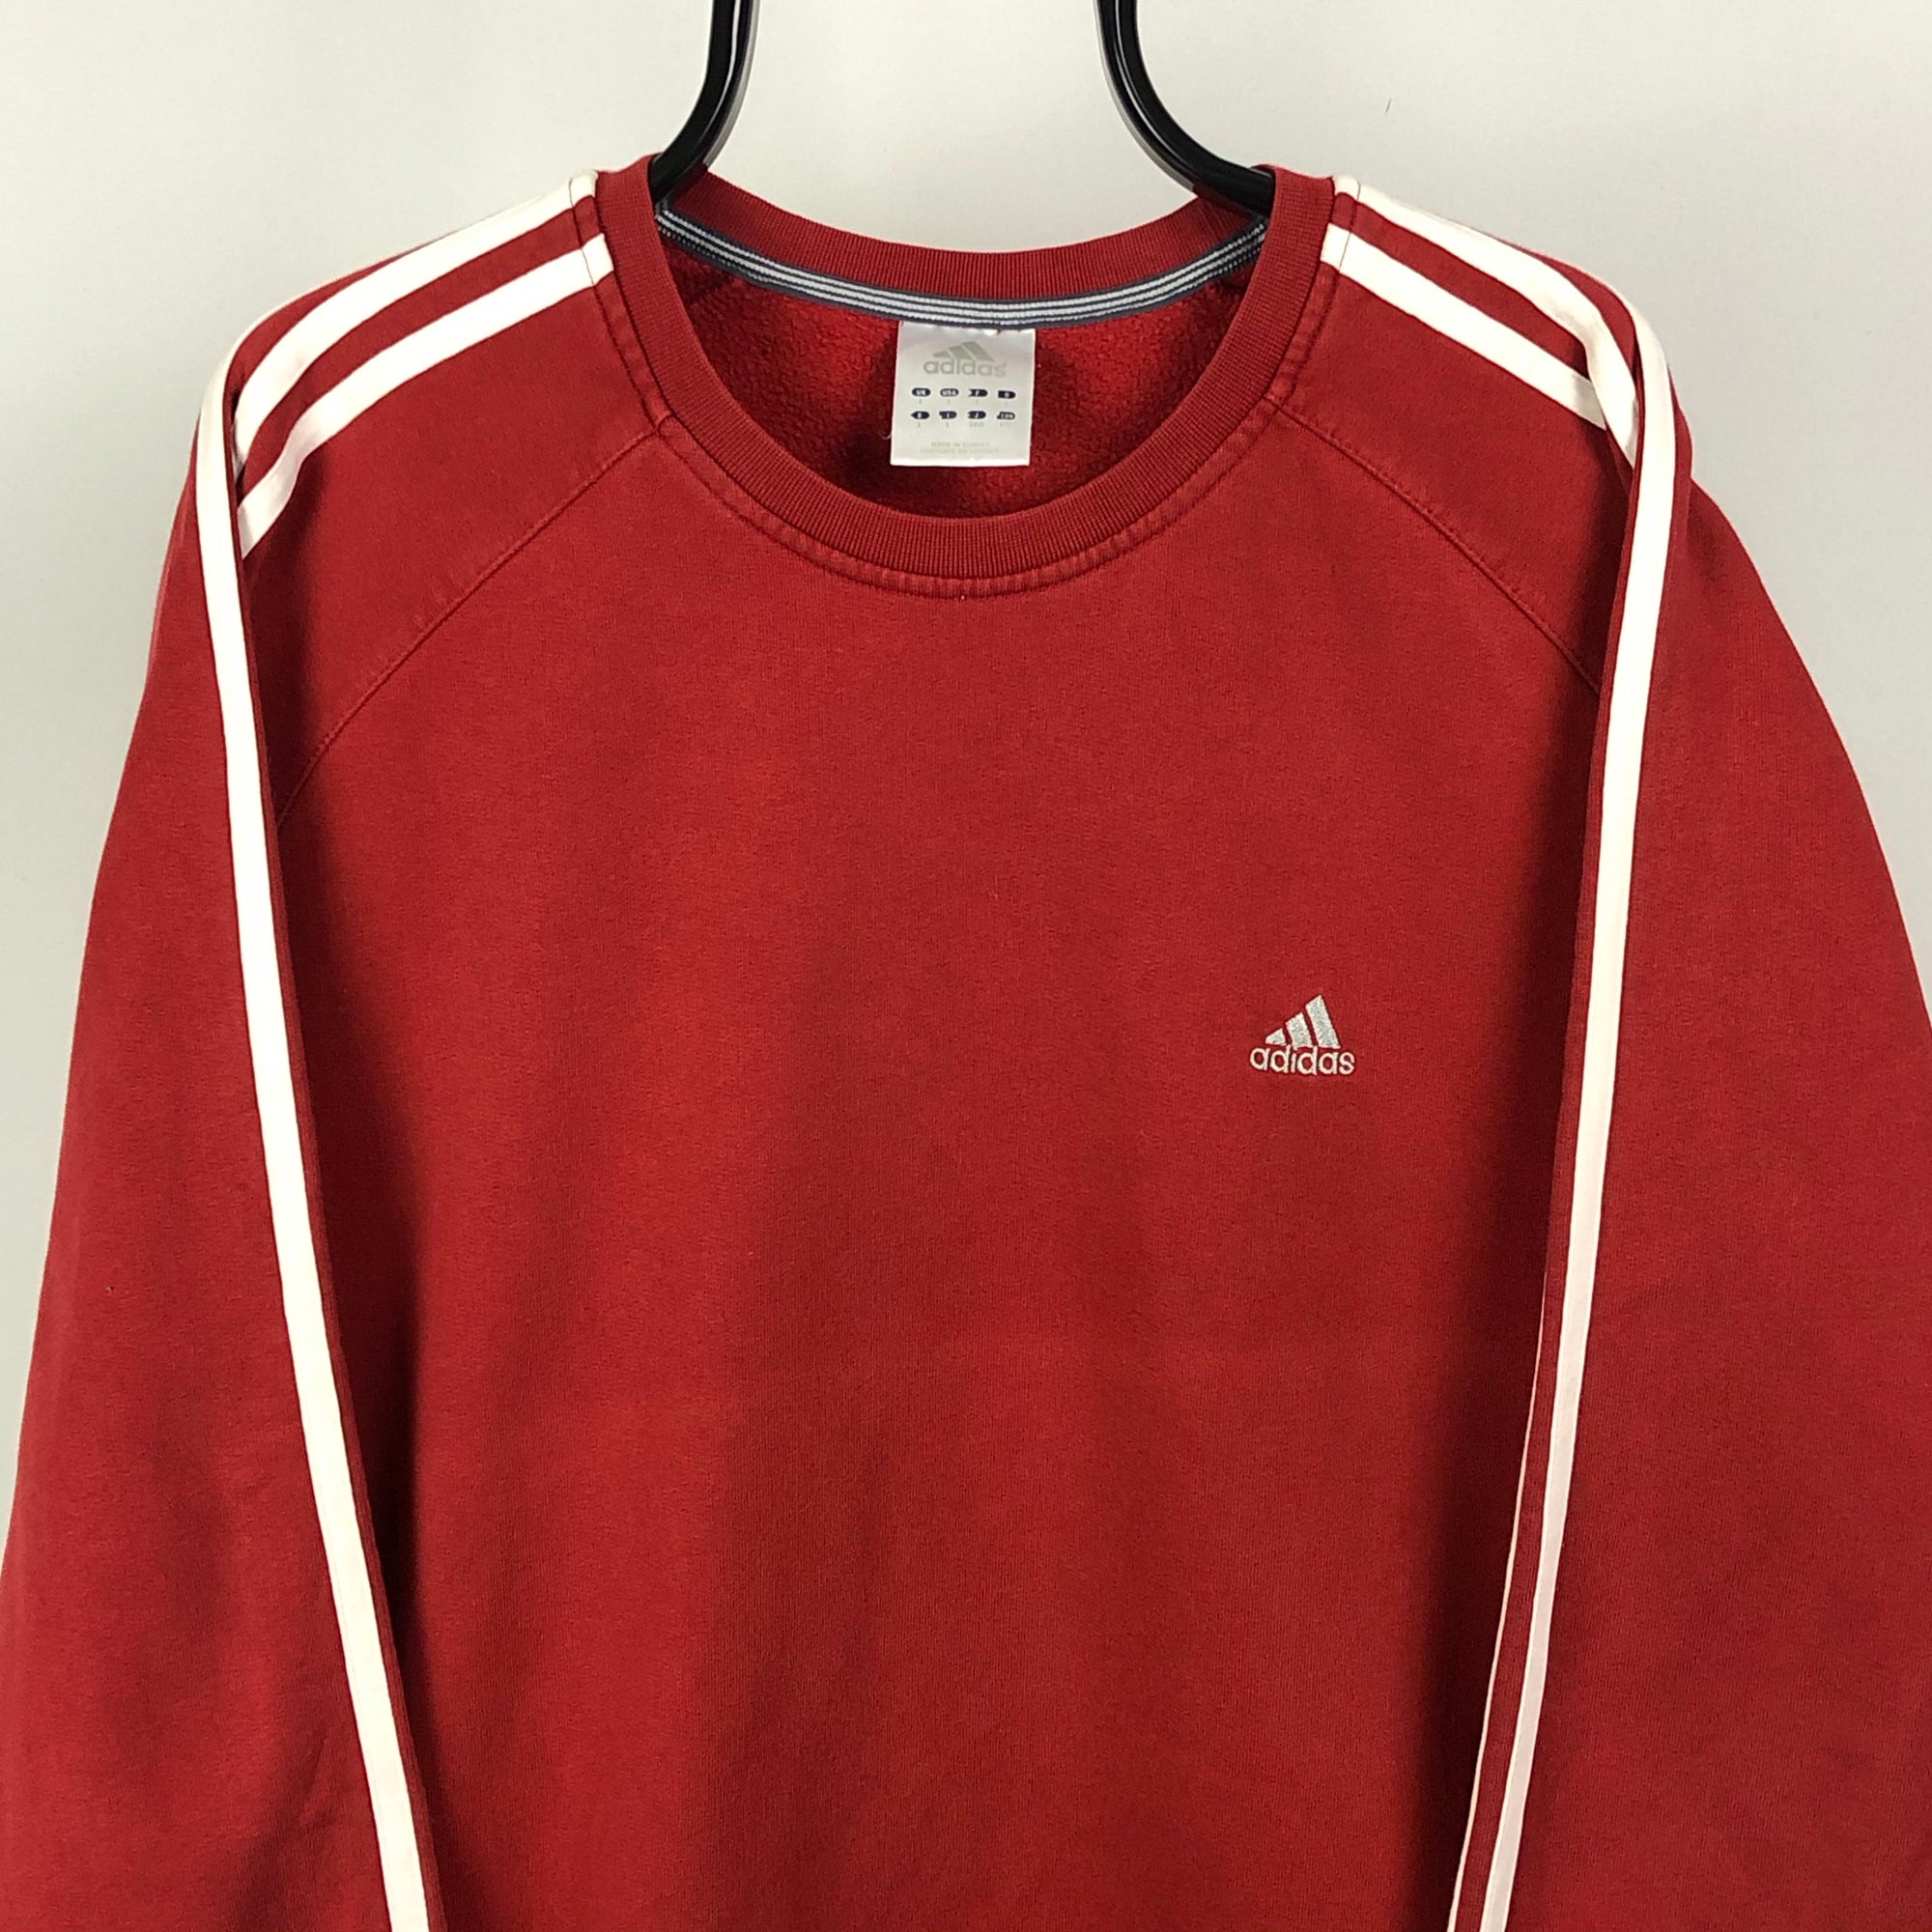 Vintage Adidas Sweatshirt in Red & White - Men’s Large/Women’s XL